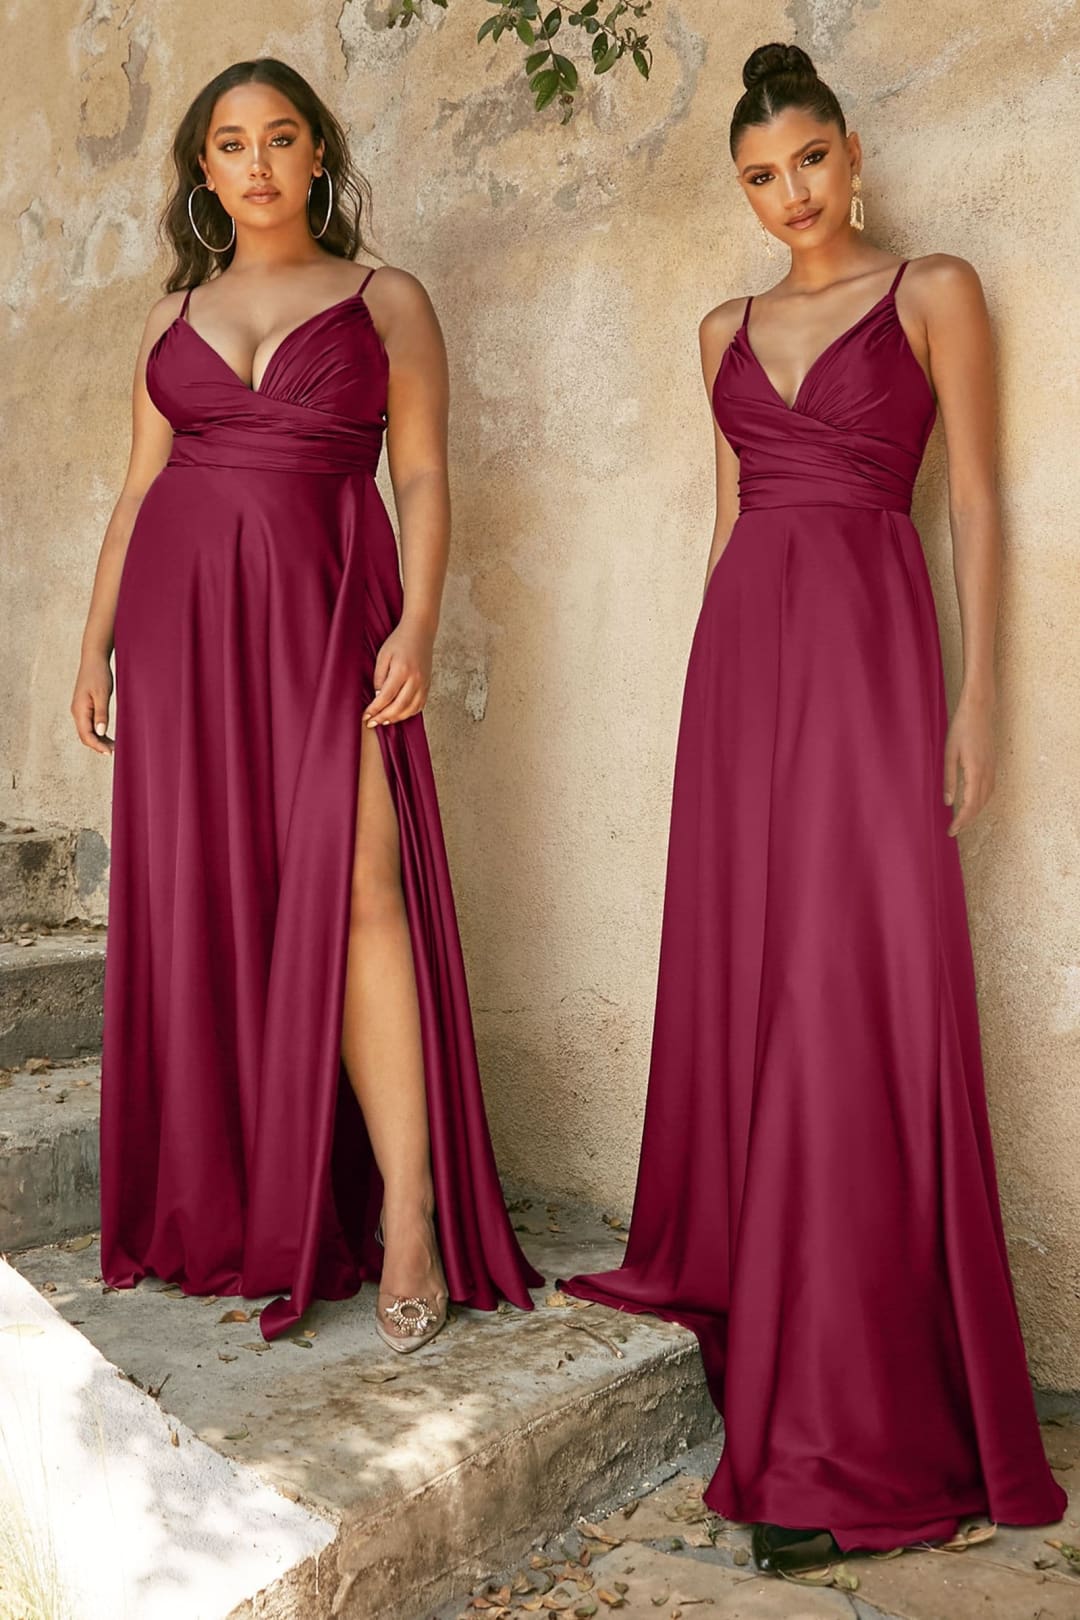 Cinderella Divine 7485 Sleeveless A-Line Bridesmaids Evening Gown - BURGUNDY / 4 - Dress